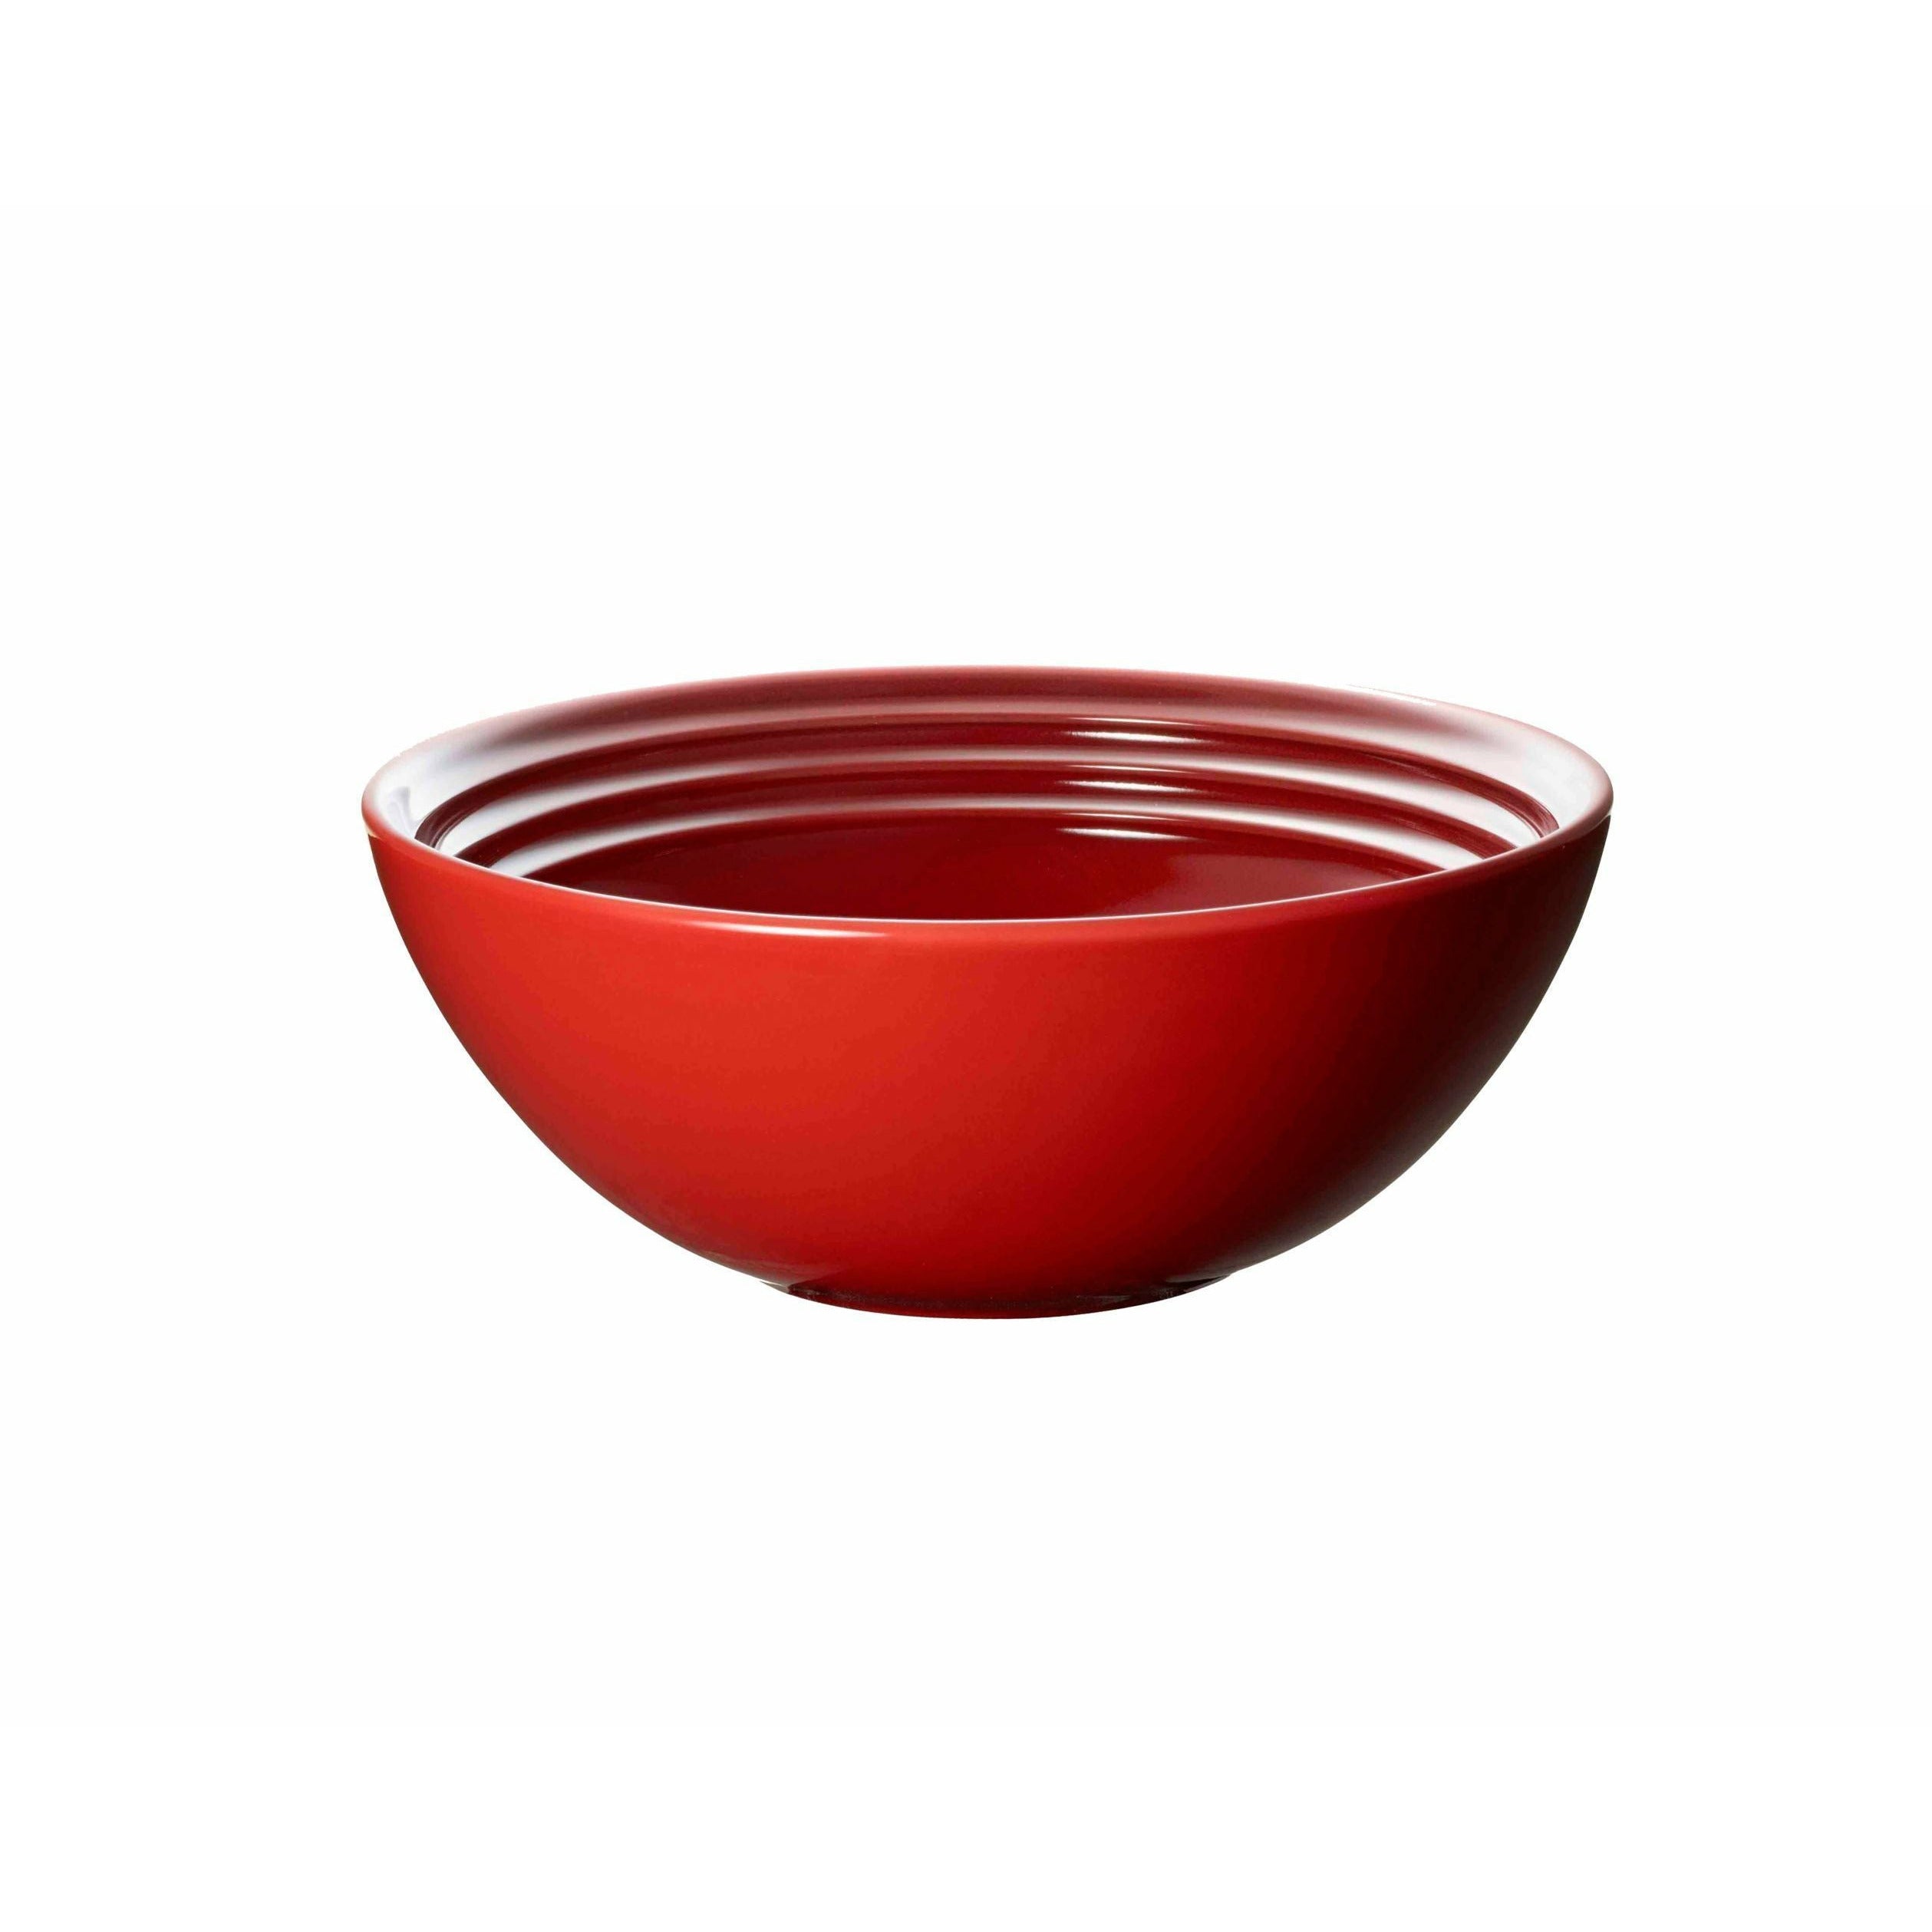 Le Creuset Signature Müsli Bowl 16 cm, Cherry Red